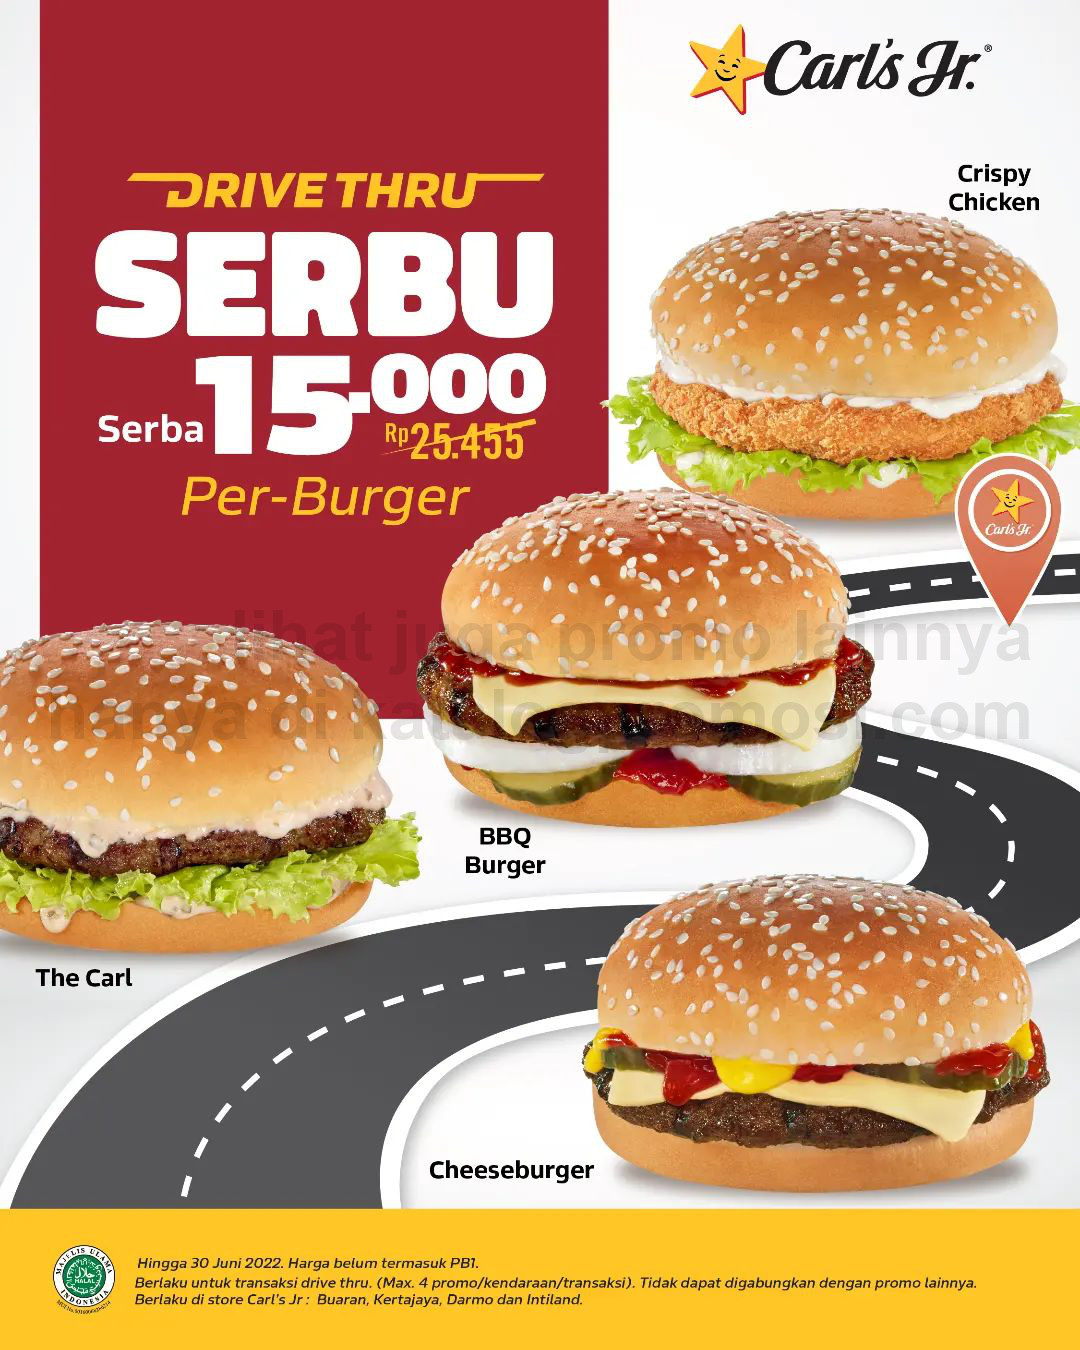 Promo CARLS Jr SPECIAL DRIVE THRU - Star Burger hanya Rp. 15.000/pc